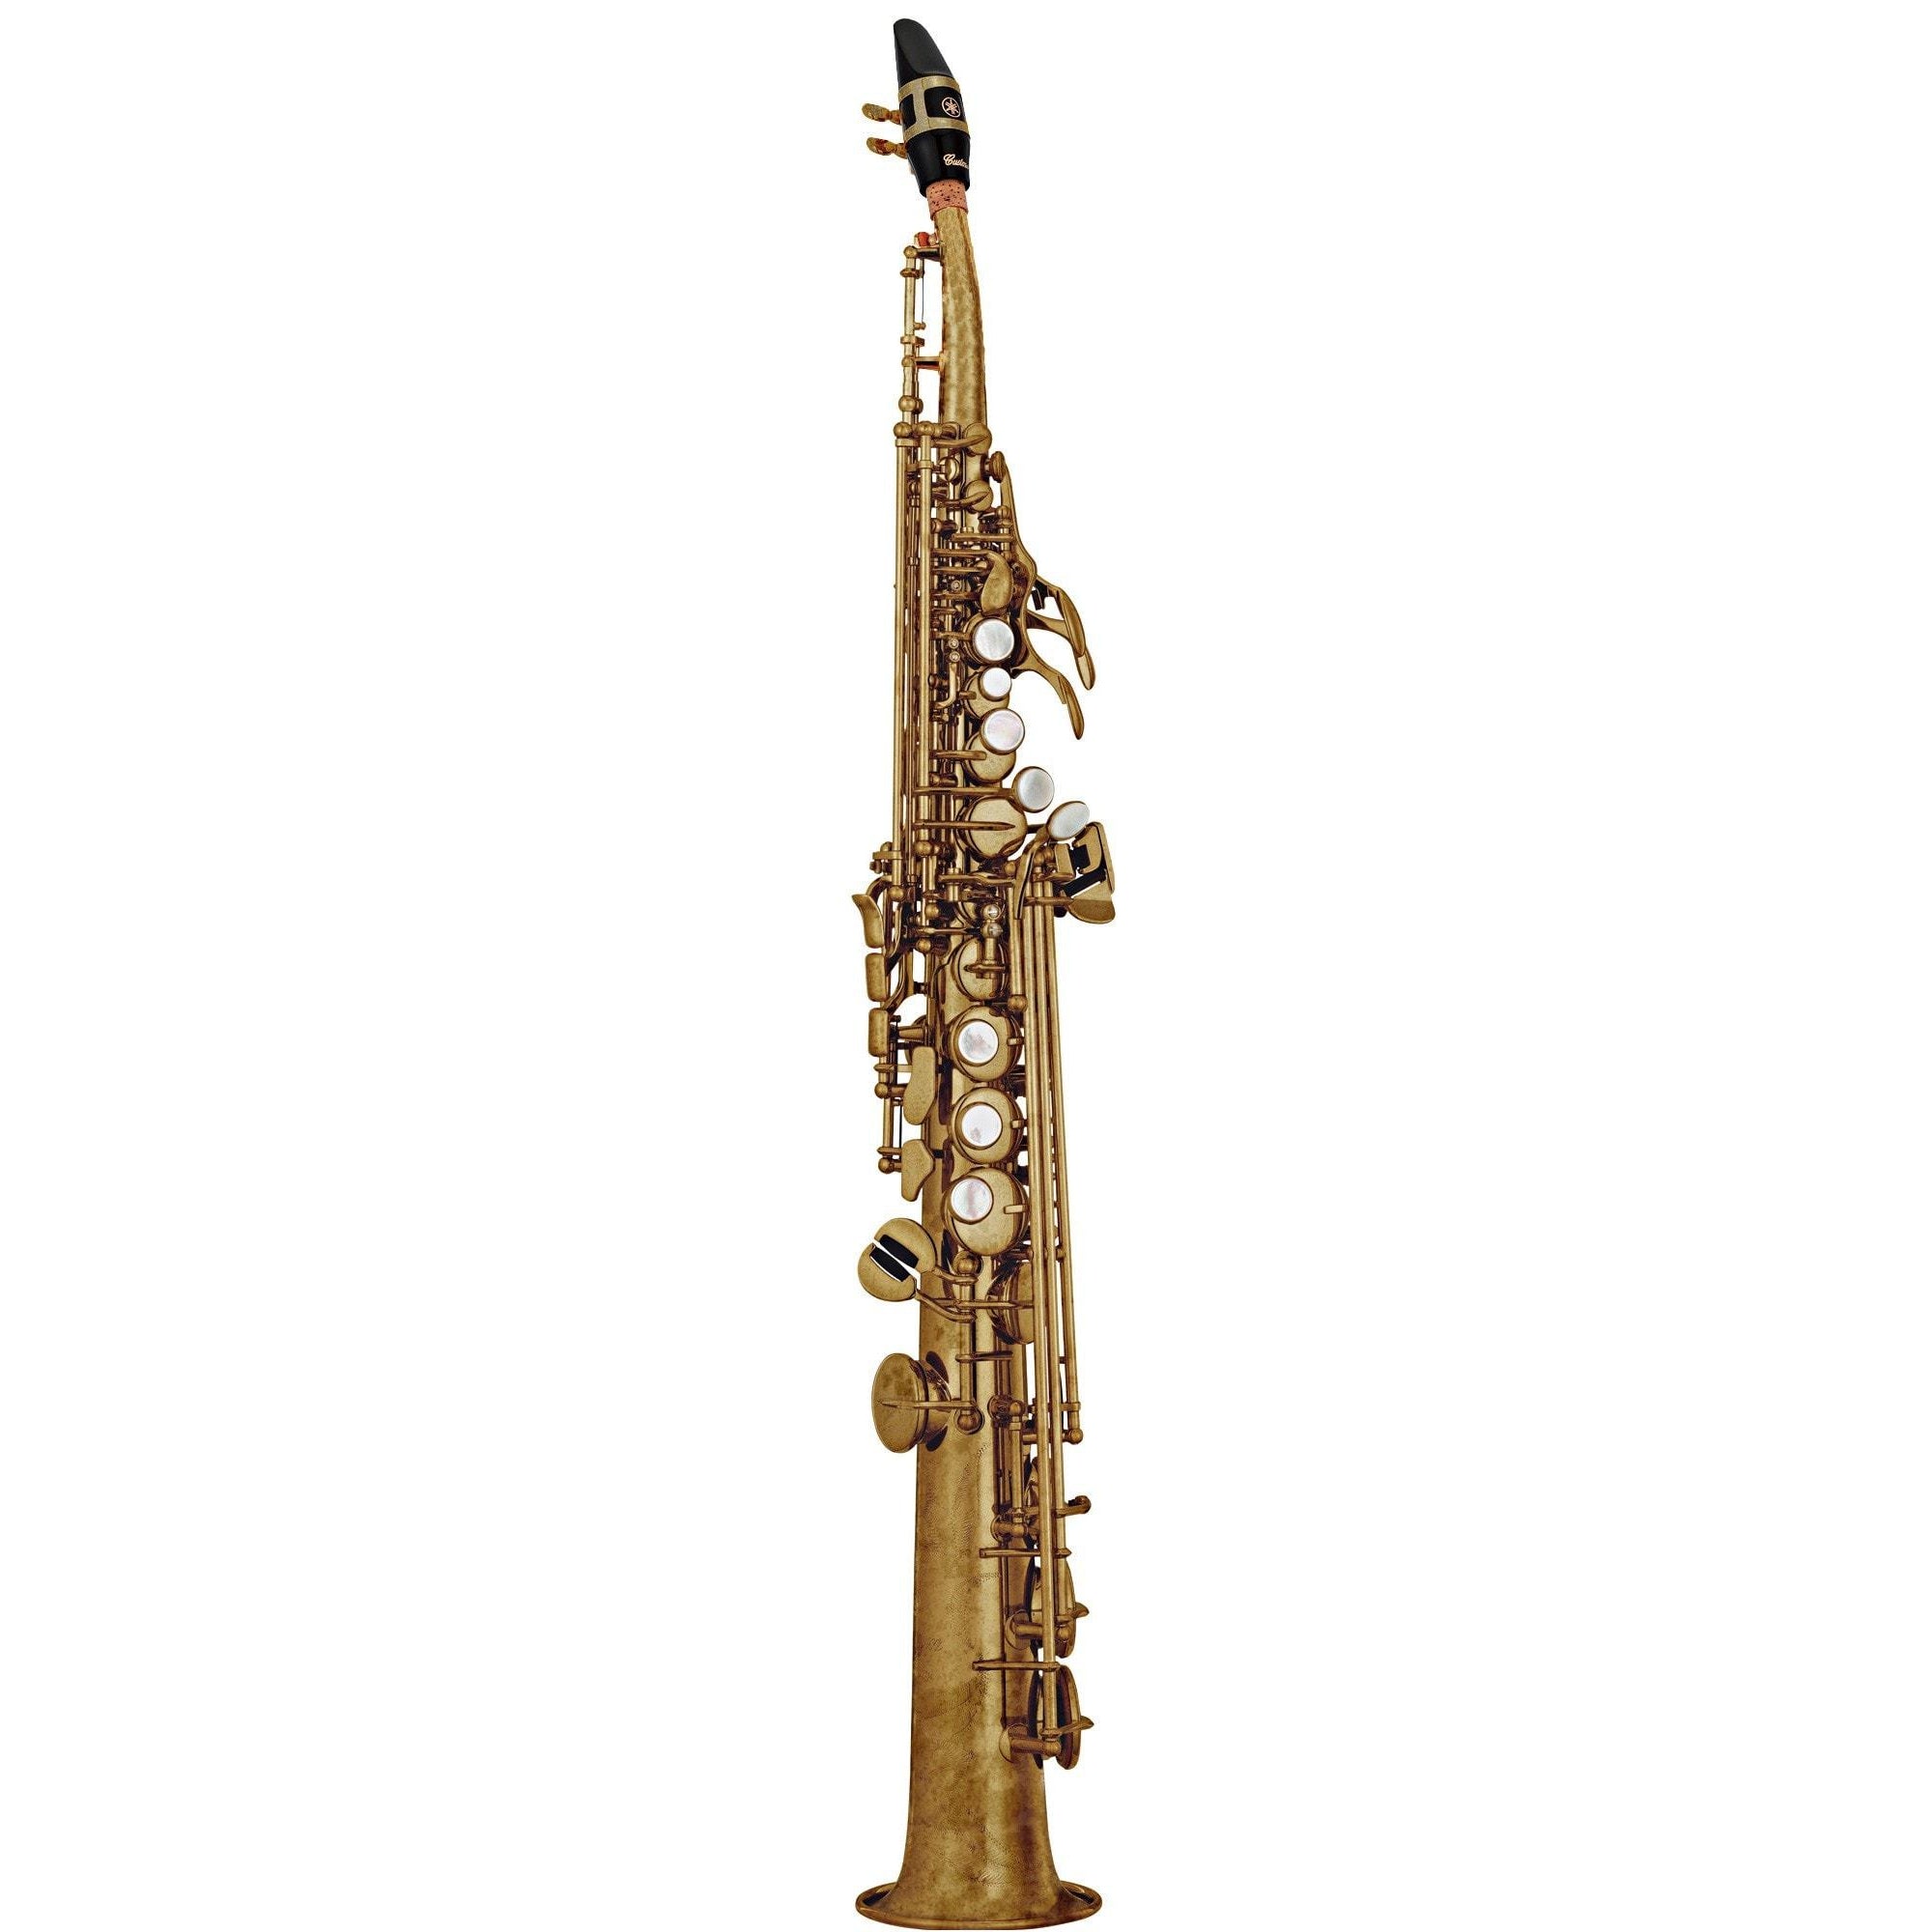 Yamaha YSS-82Z Custom Z Series Soprano Saxophone YSS-82ZRU - Same as 82ZR but Unlacquered